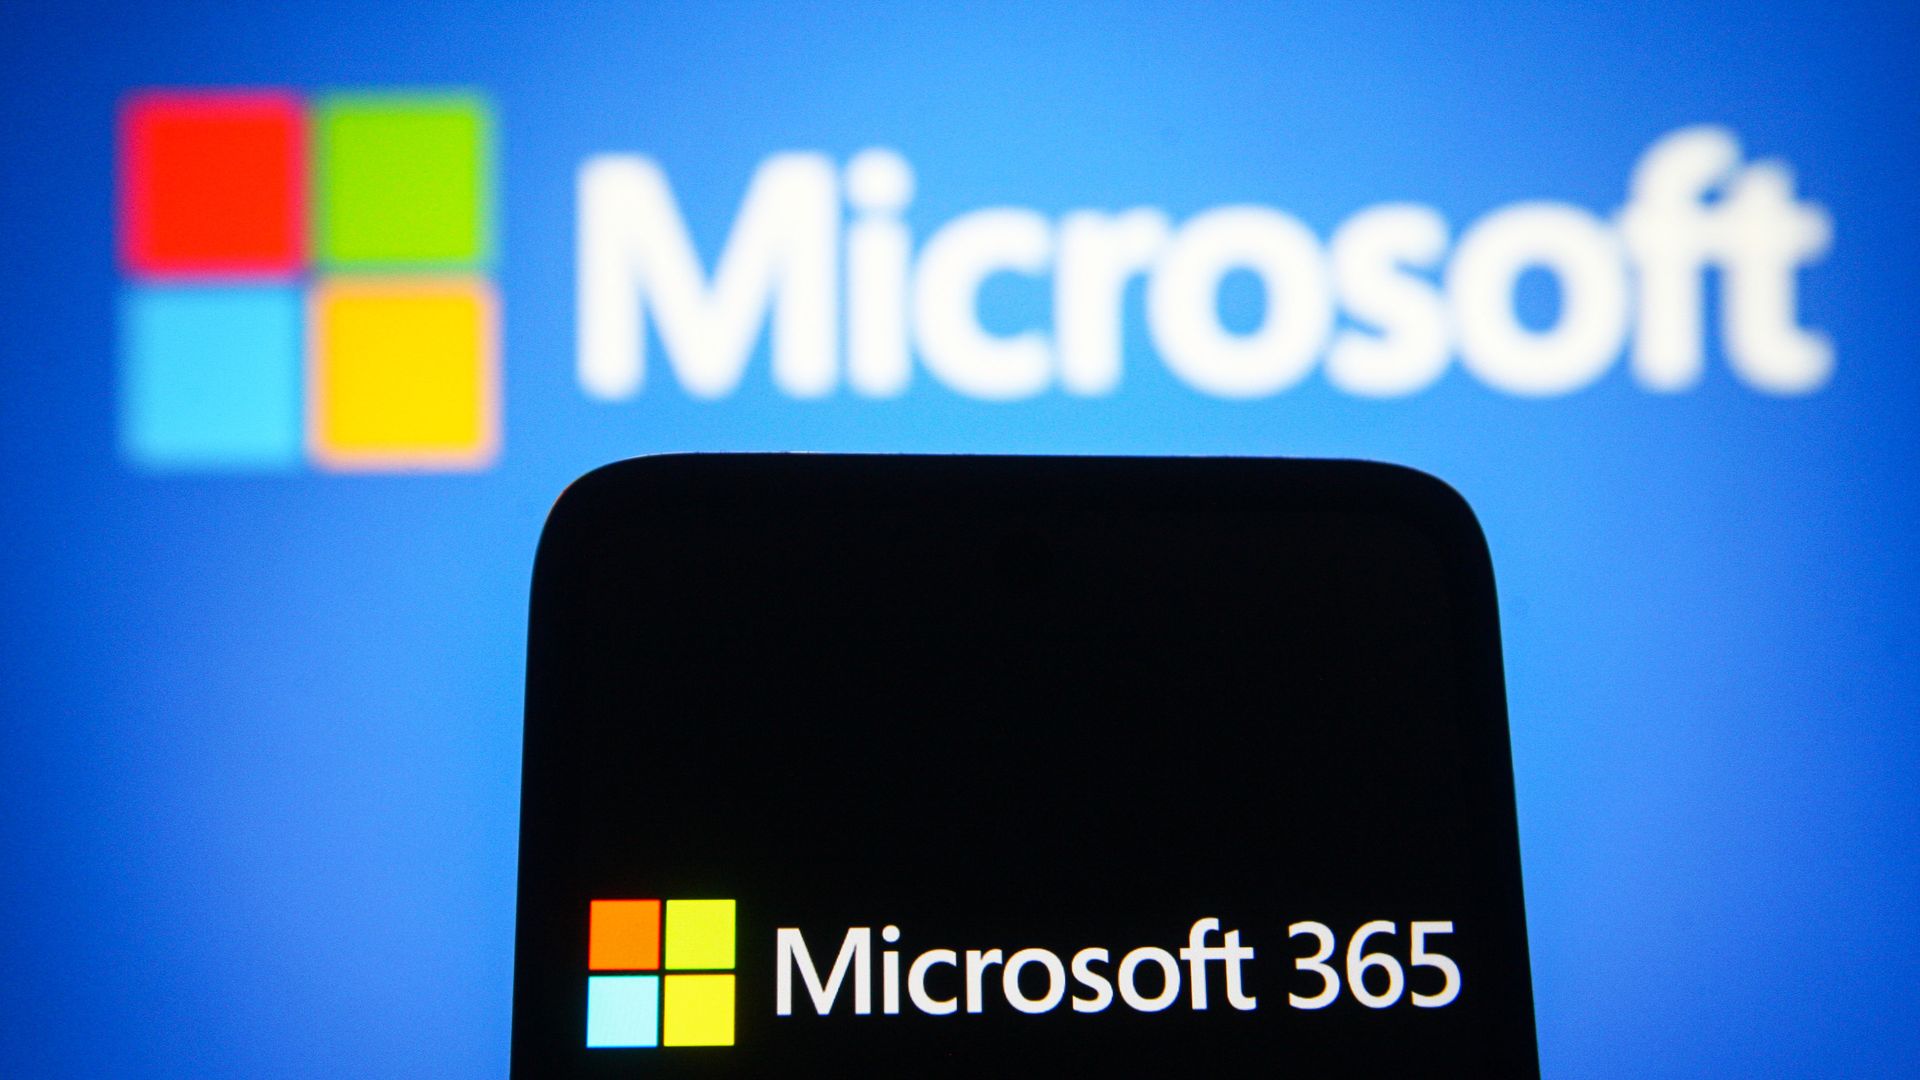 A Microsoft logo and a phone with a Microsoft 365 logo